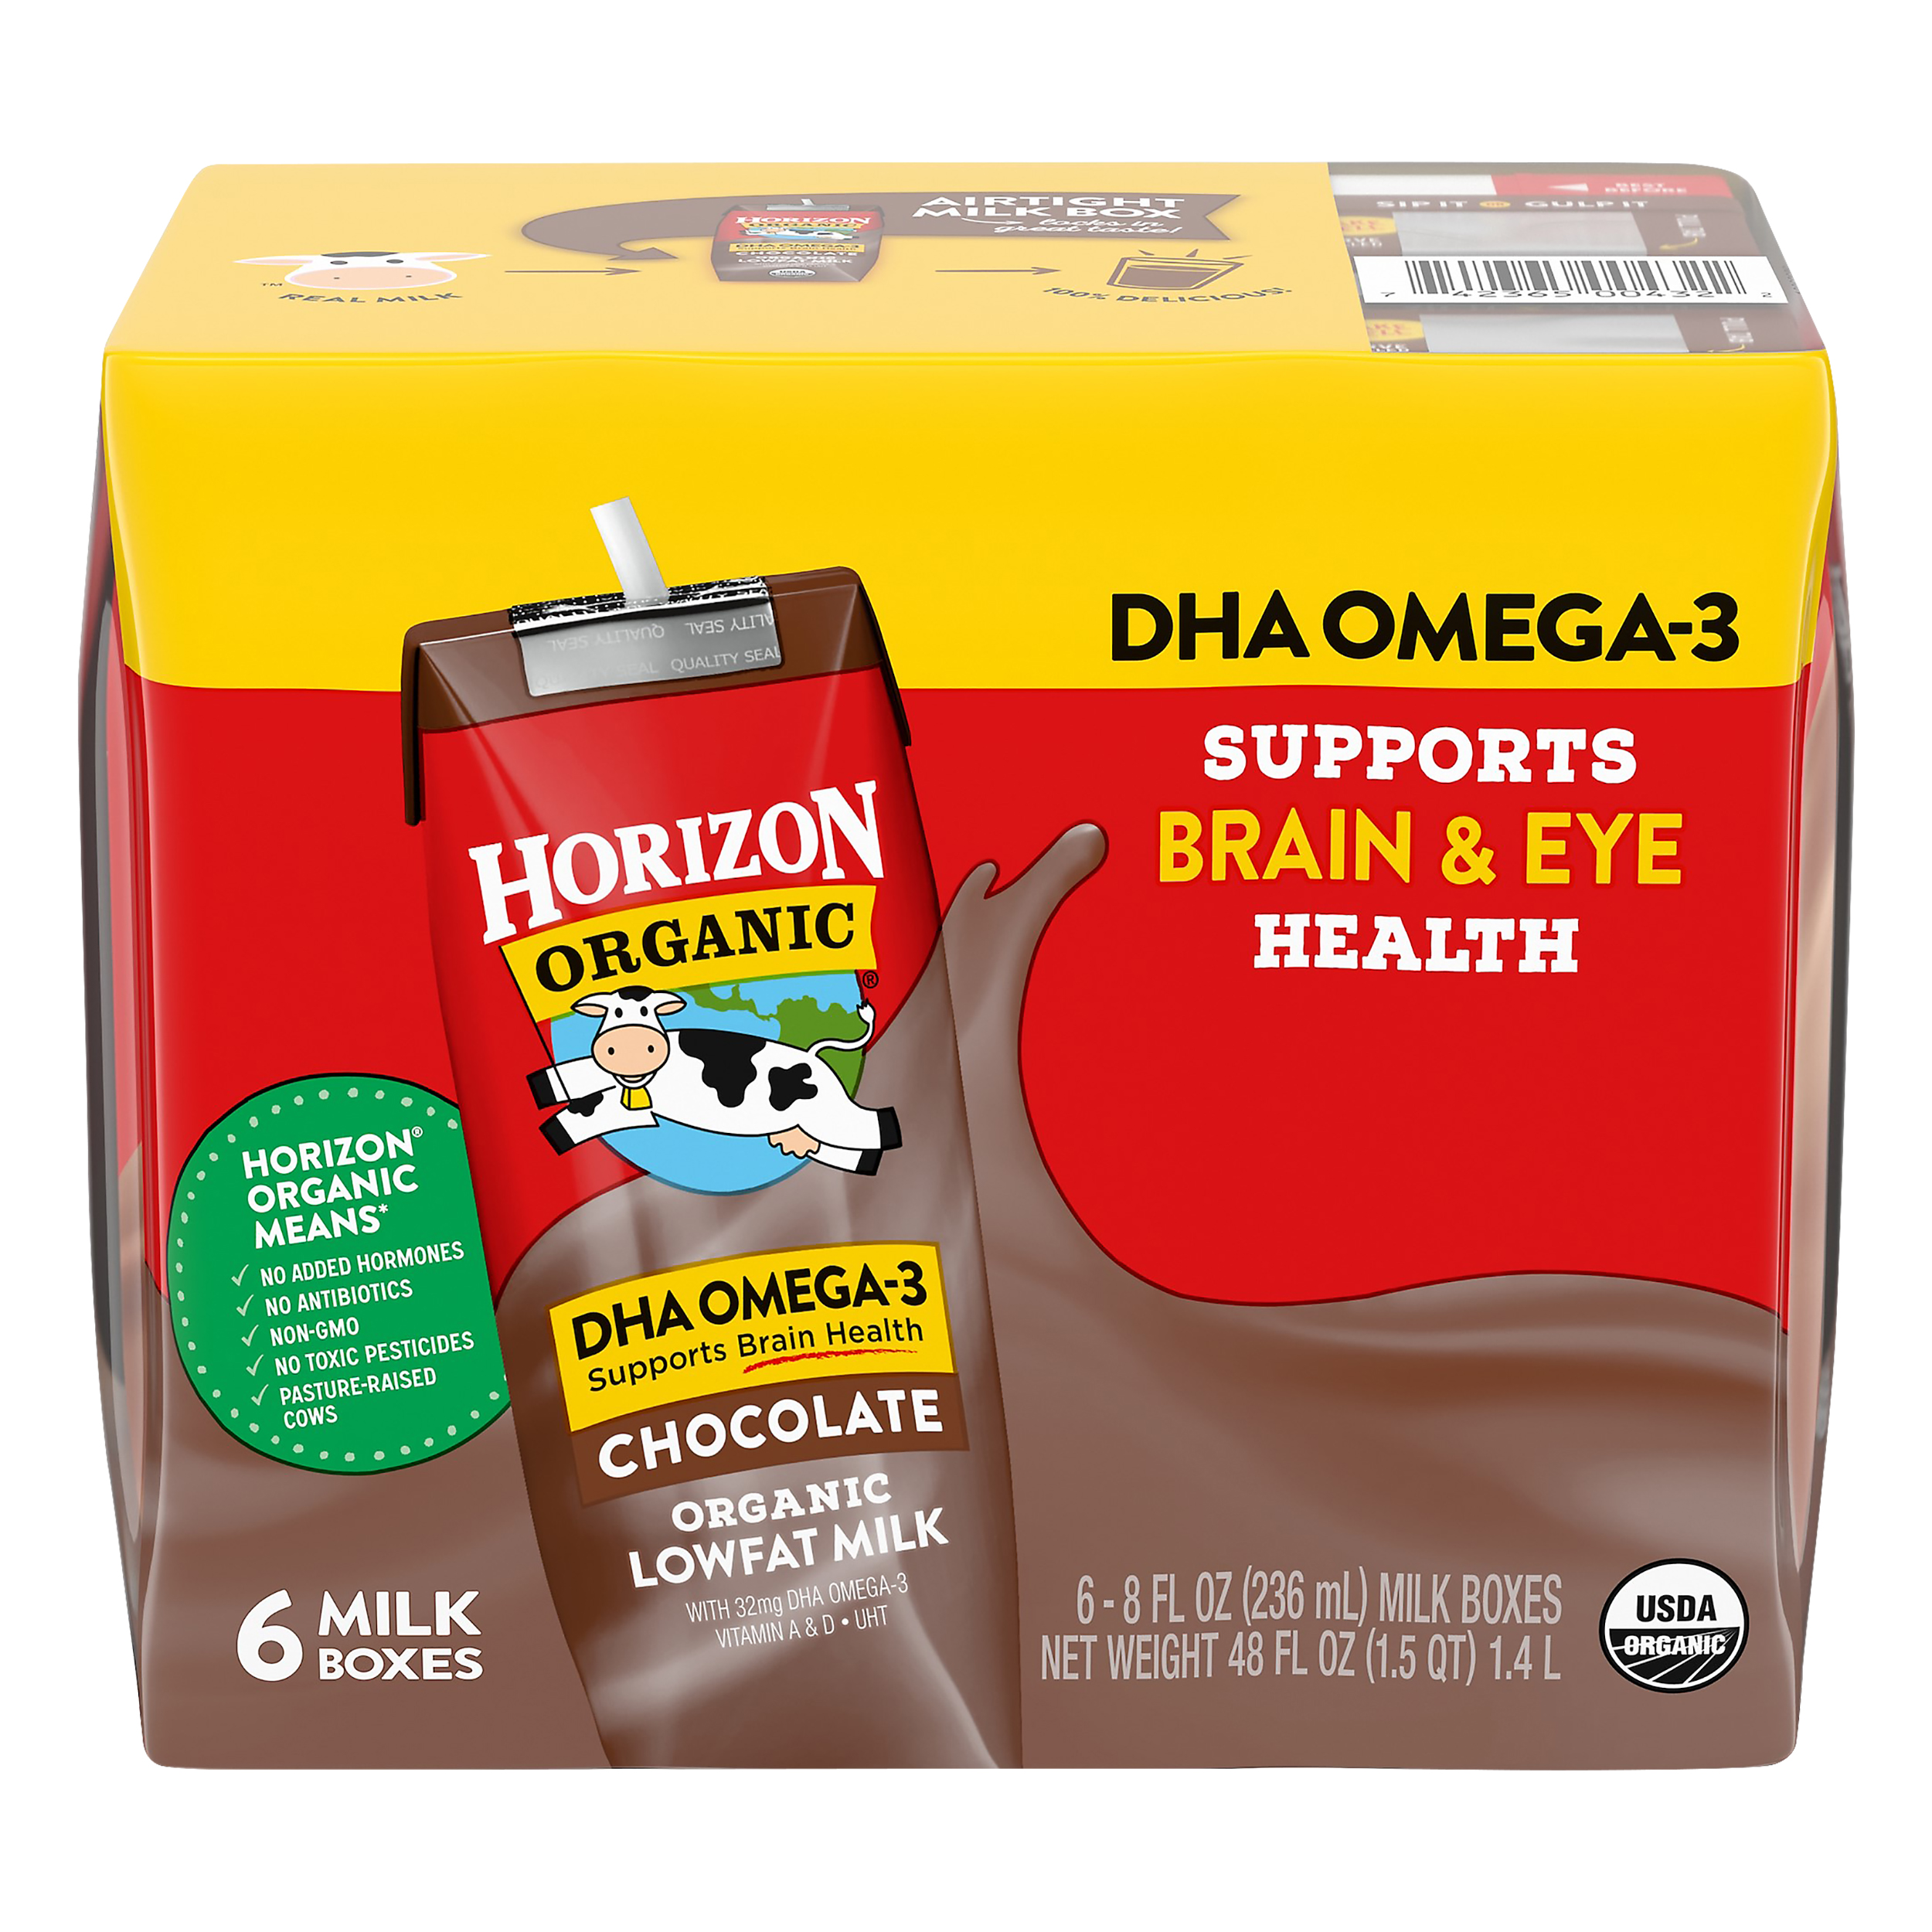 Horizon Organic 1% Lowfat DHA Omega-3 Chocolate Milk 3 innerpacks per case 48.0 fl